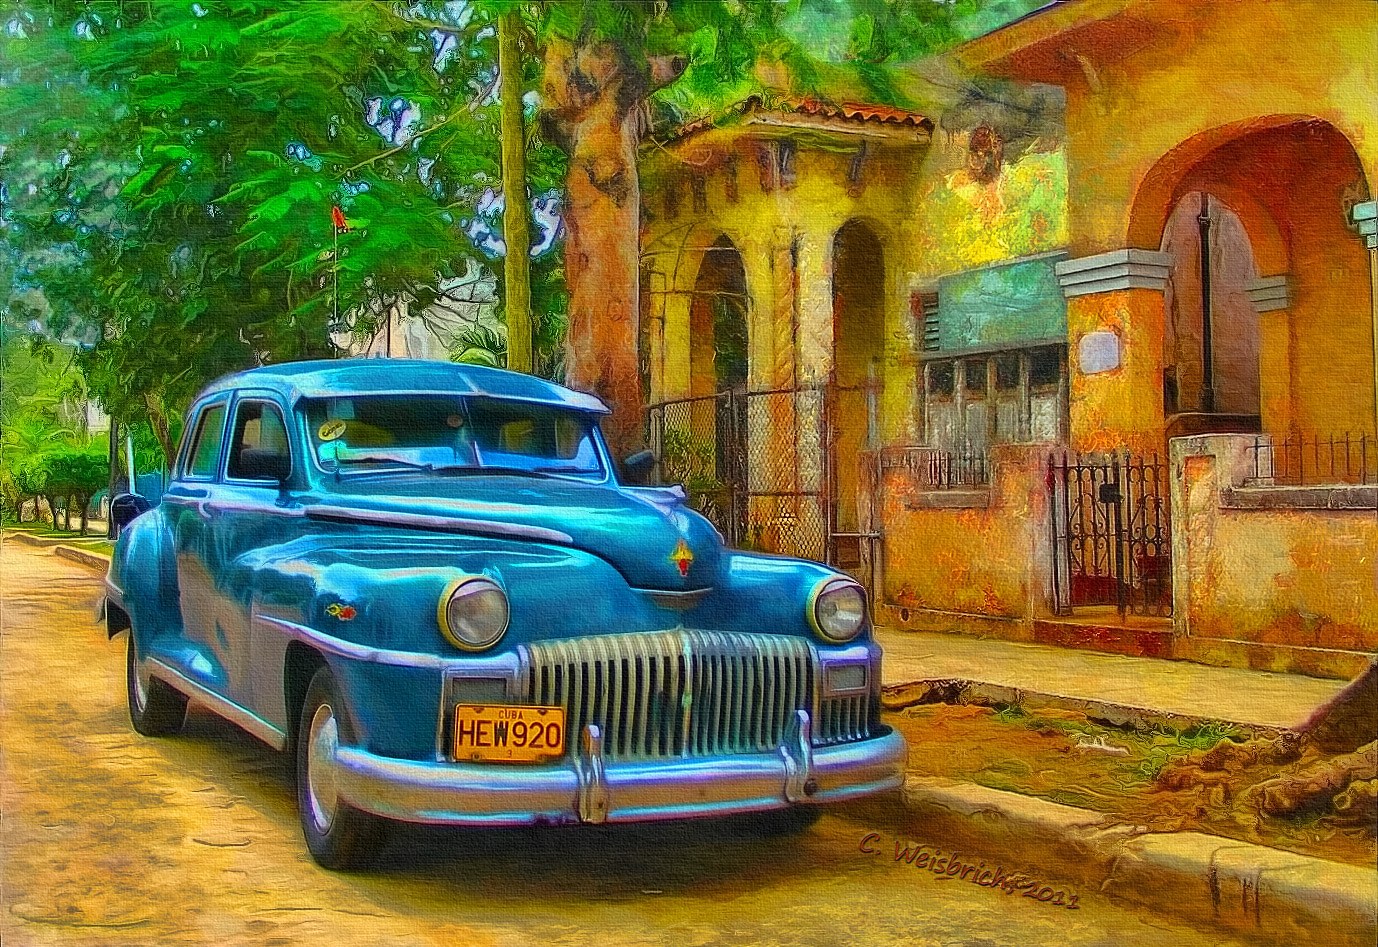 Art From Cuba